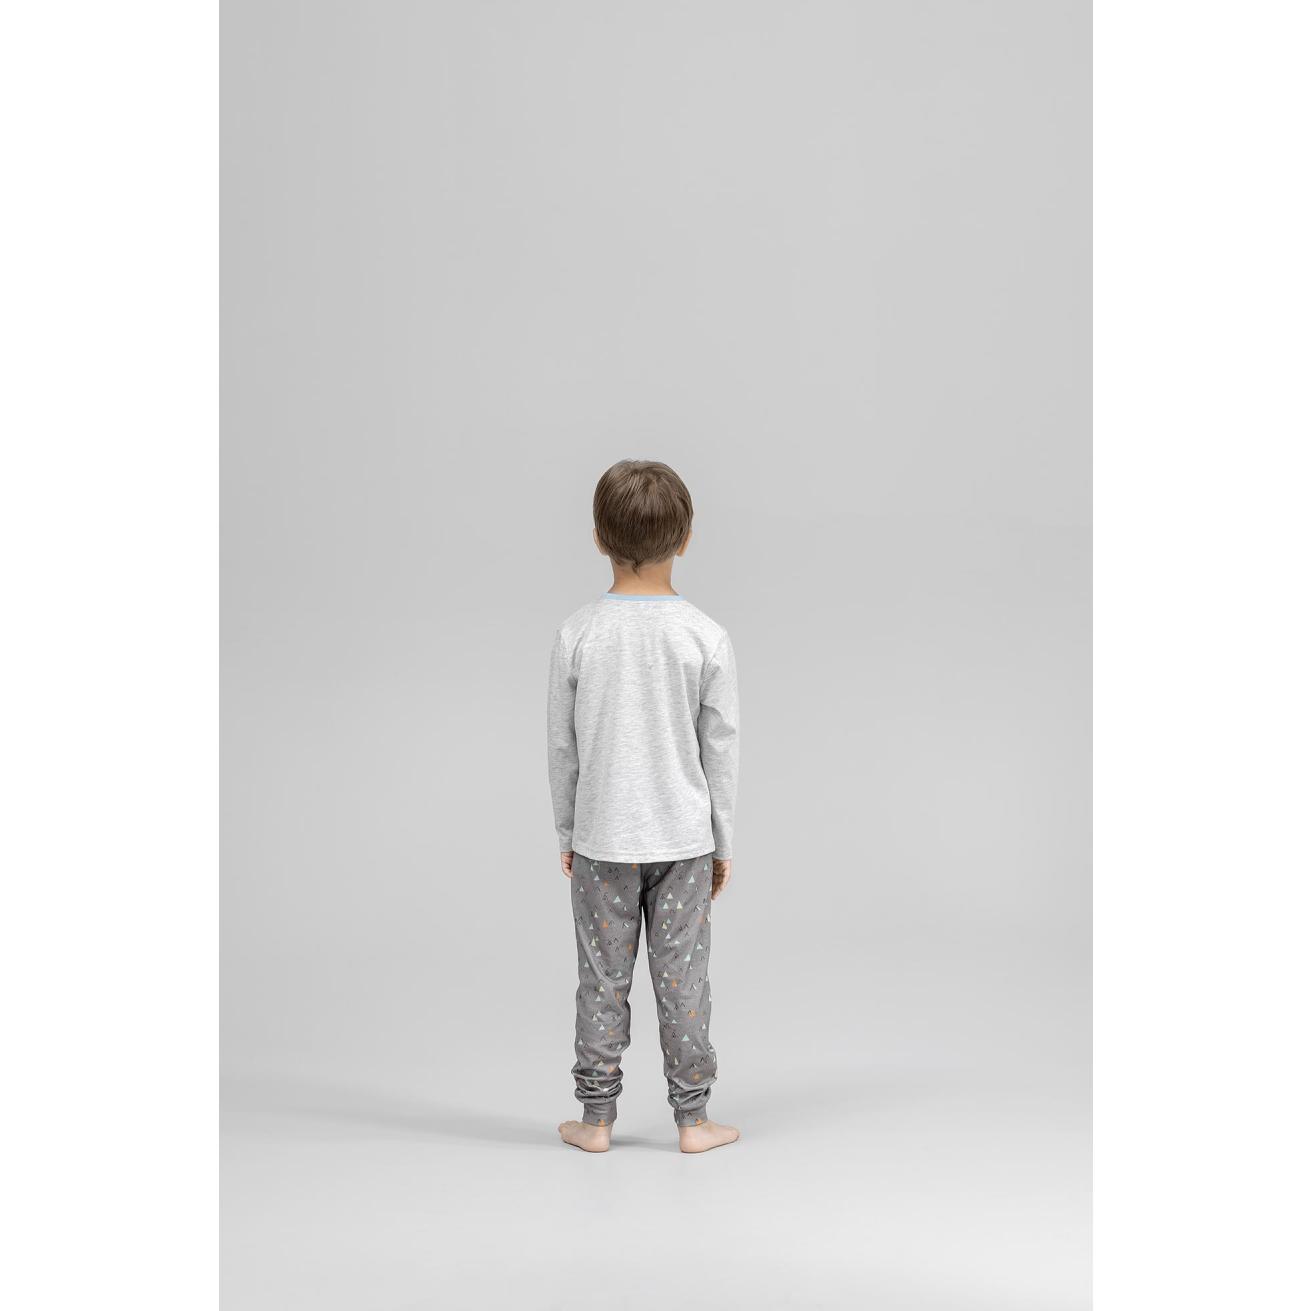 Пижама для мальчиков Kids by togas Касслер серый 104-110 см, размер 104-110 см - фото 5